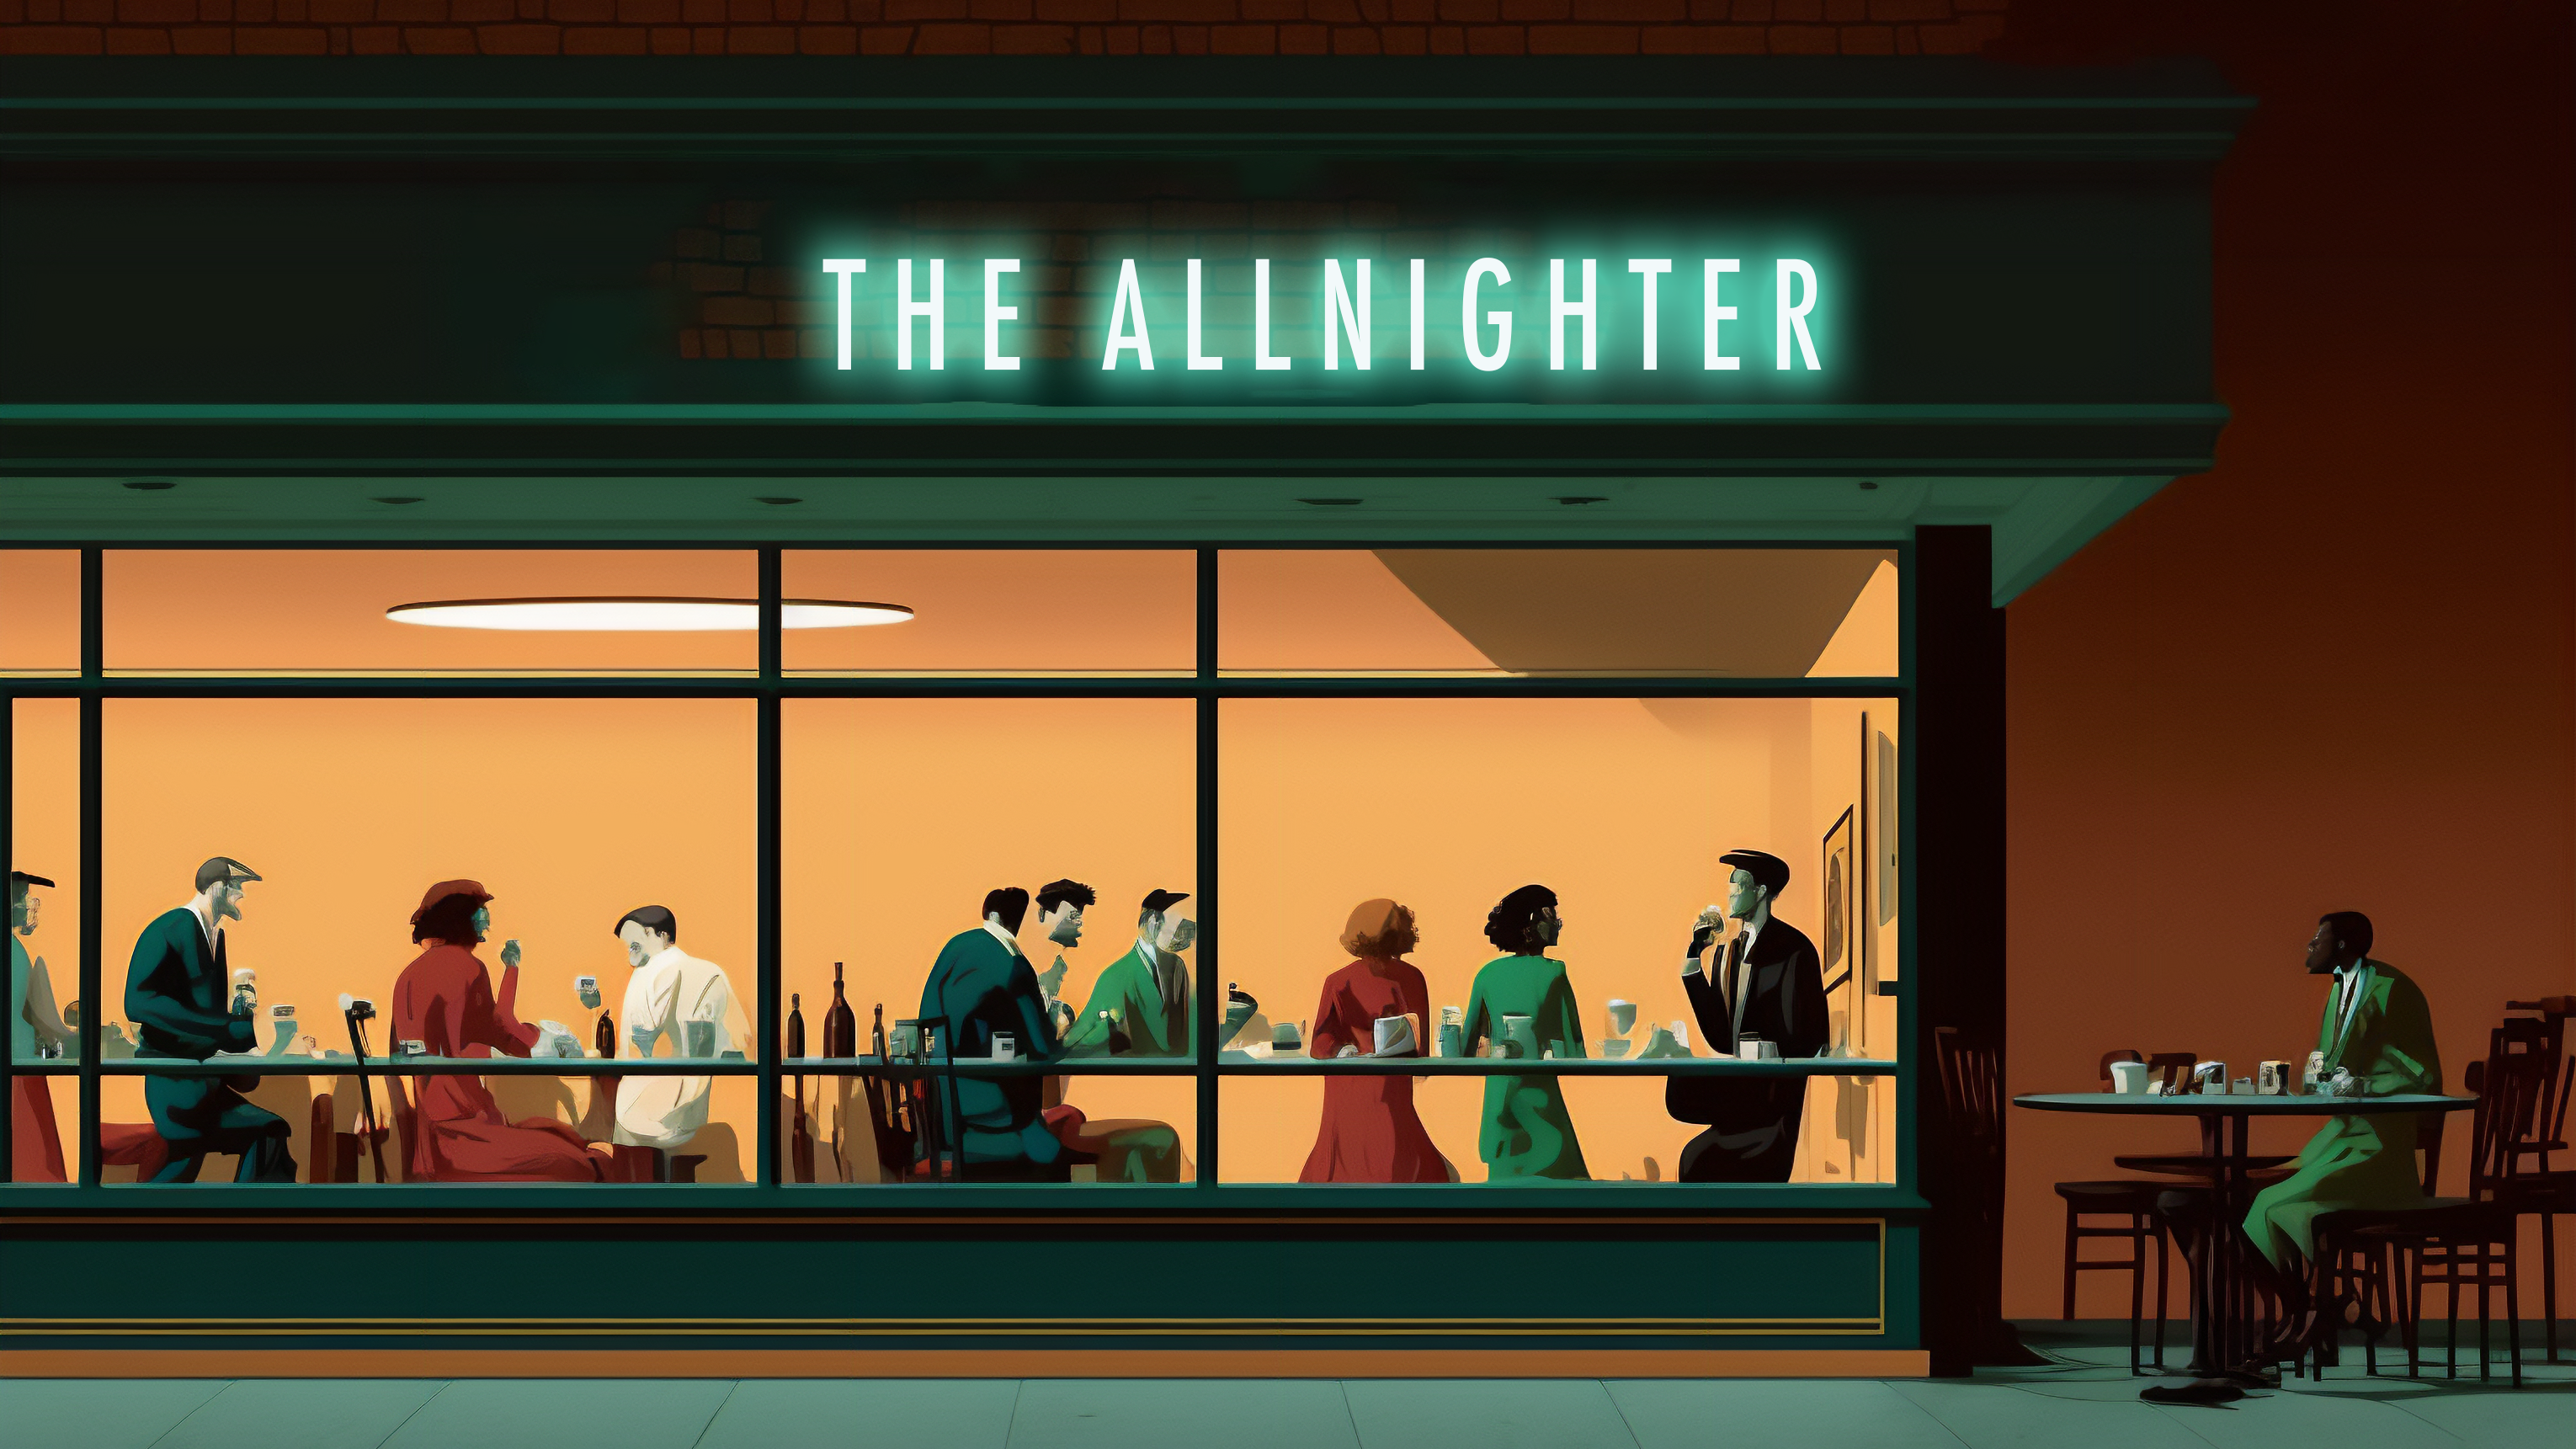 Ai Art Illustration Diner Cafe Night People Neon 3060x1721